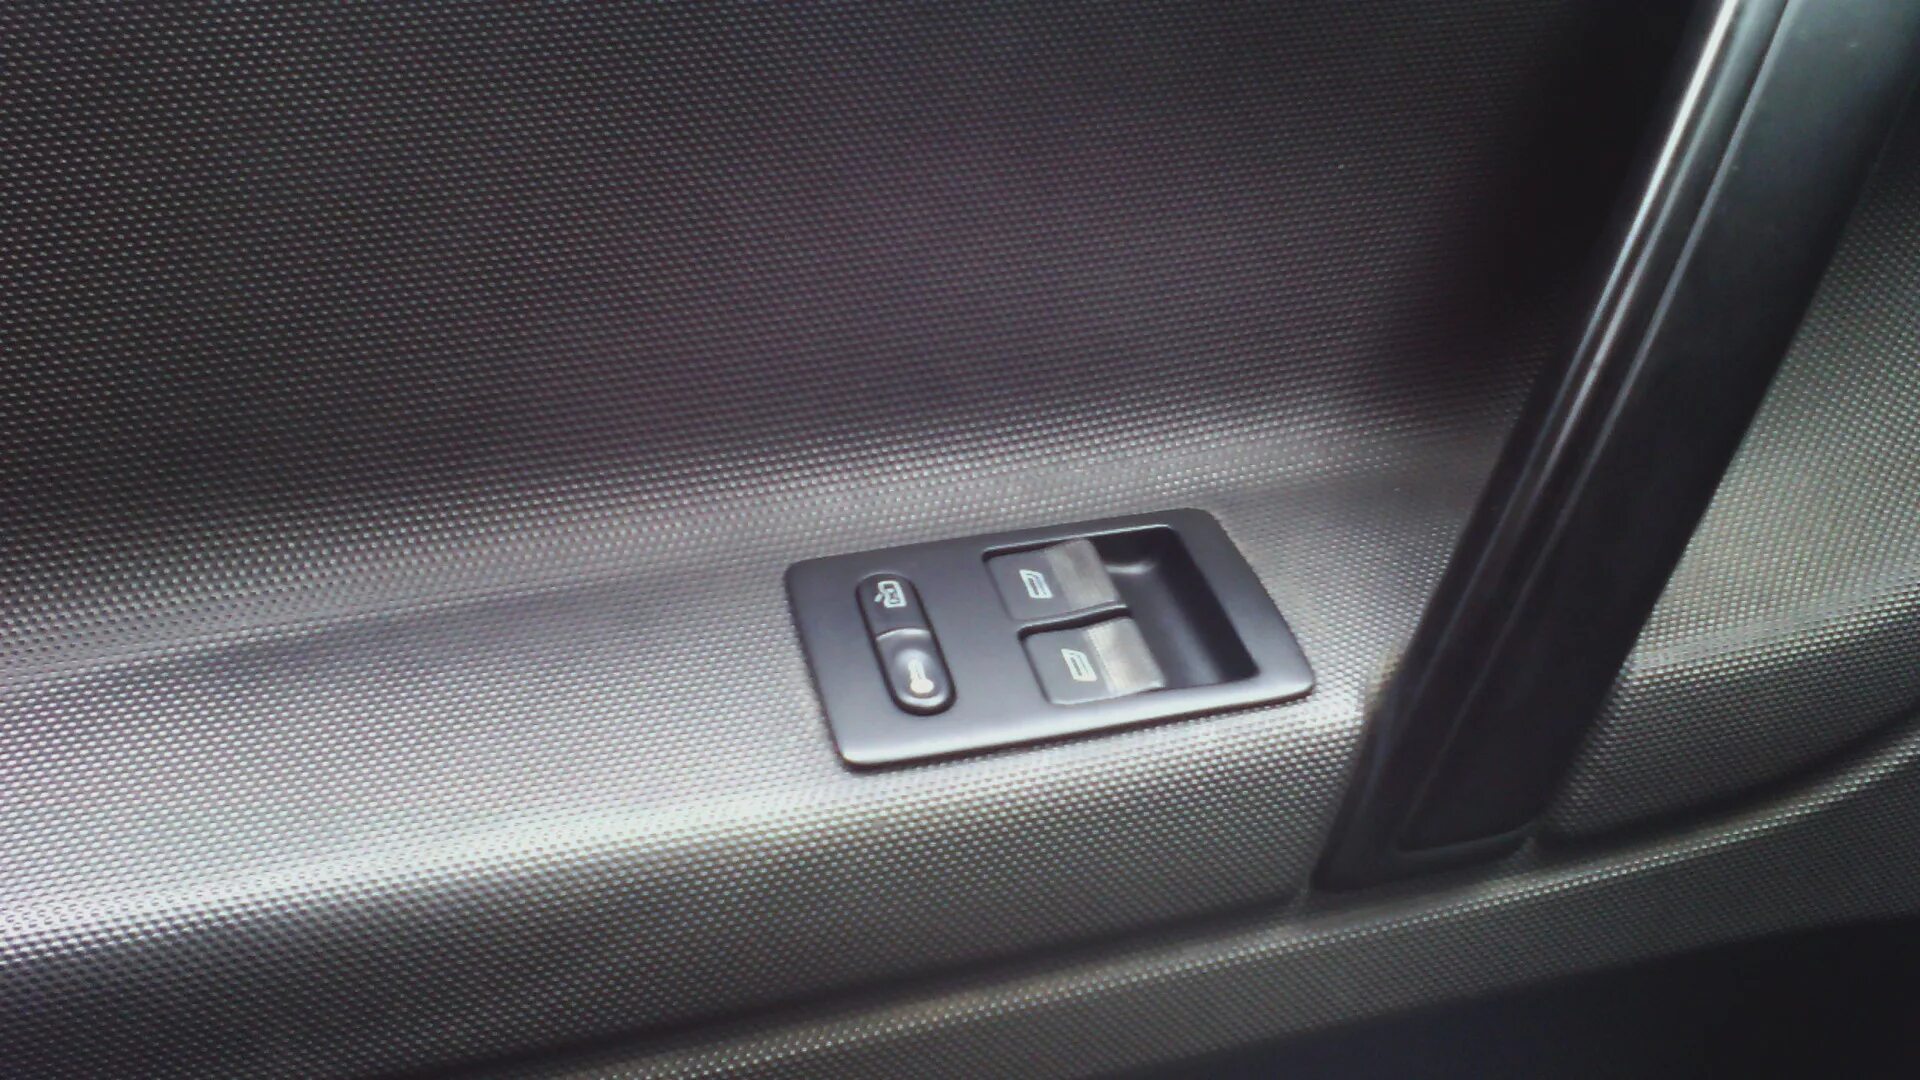 Кнопки vw polo. VW Polo 2013 переключатель стеклоподъемника. Выключатель стеклоподъемников Фольксваген поло. Поло седан 5 стеклоподъемников. Кнопка стеклоподъемника Polo 2013.